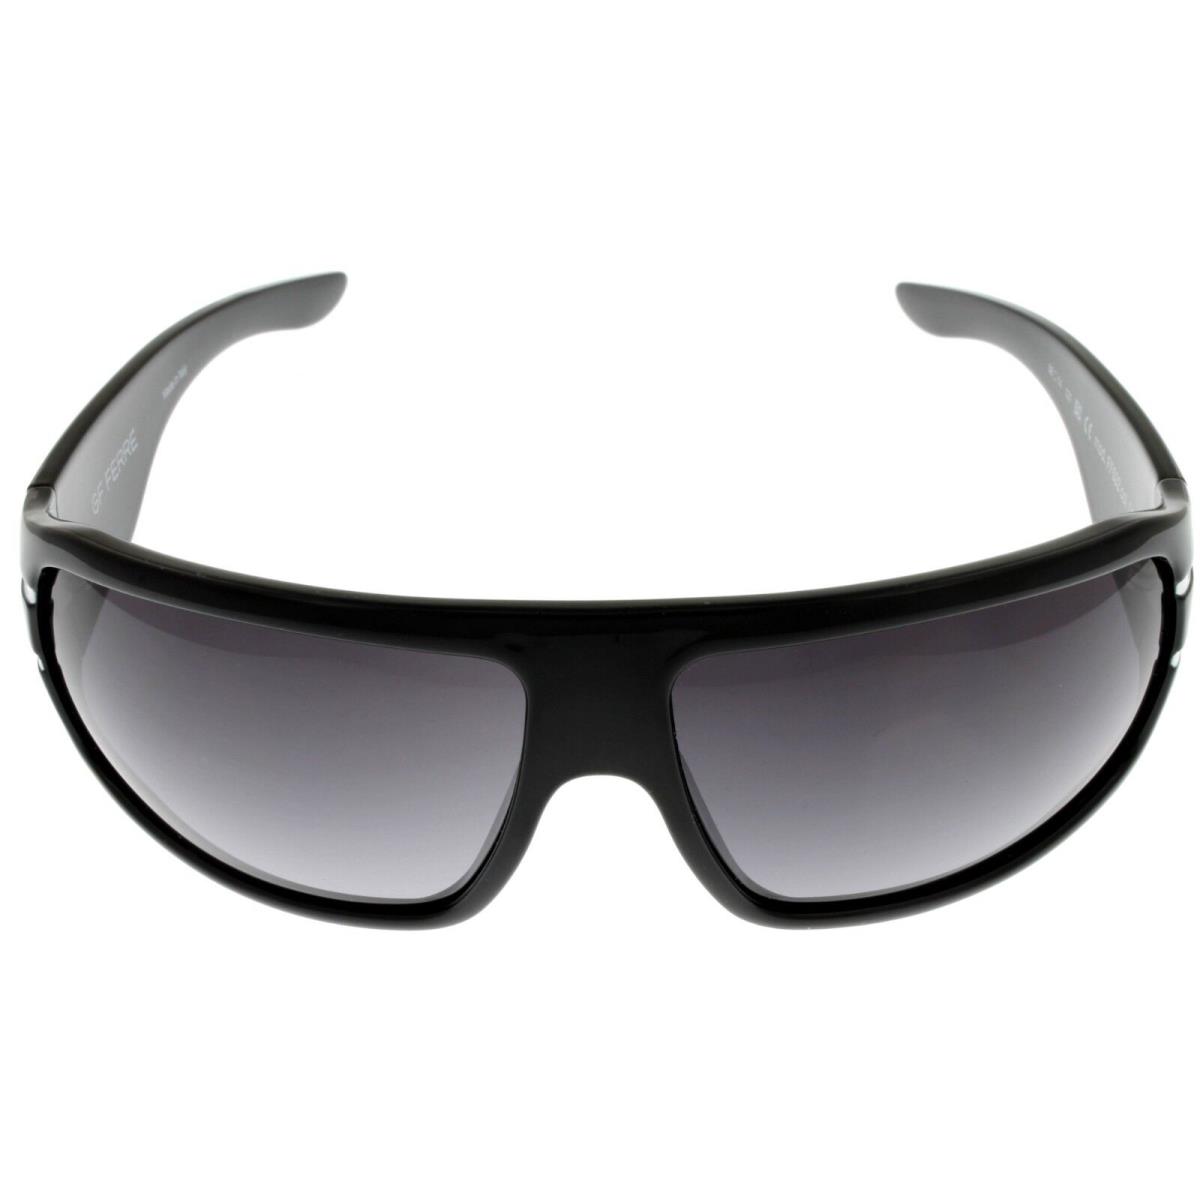 Gianfranco Ferre Sunglasses Unisex Black Gray Wrap FF692 01 Designer